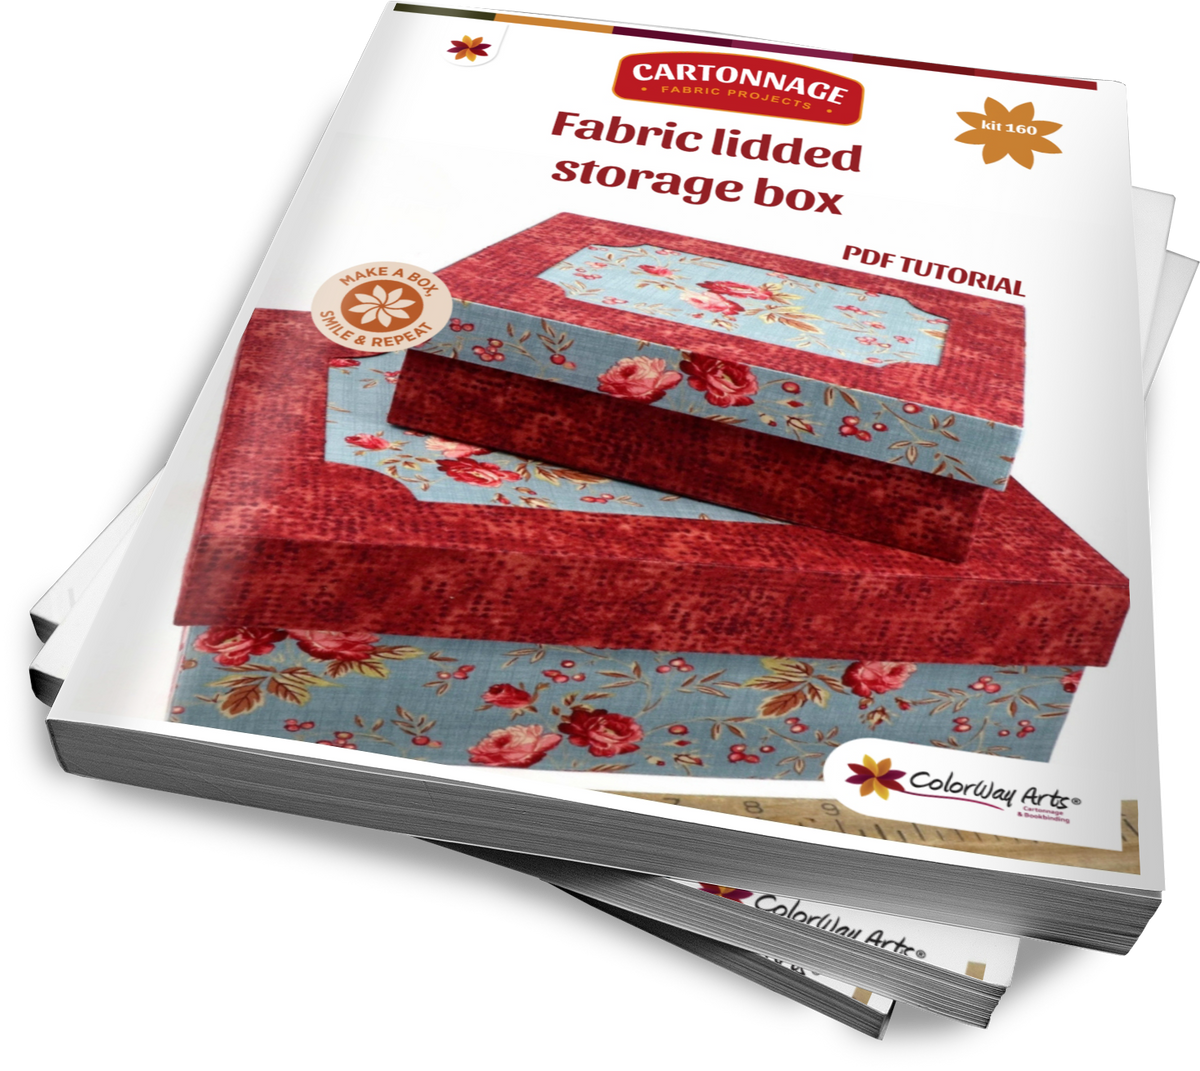 Cartonnage Fabric lidded box - PDF tutorial